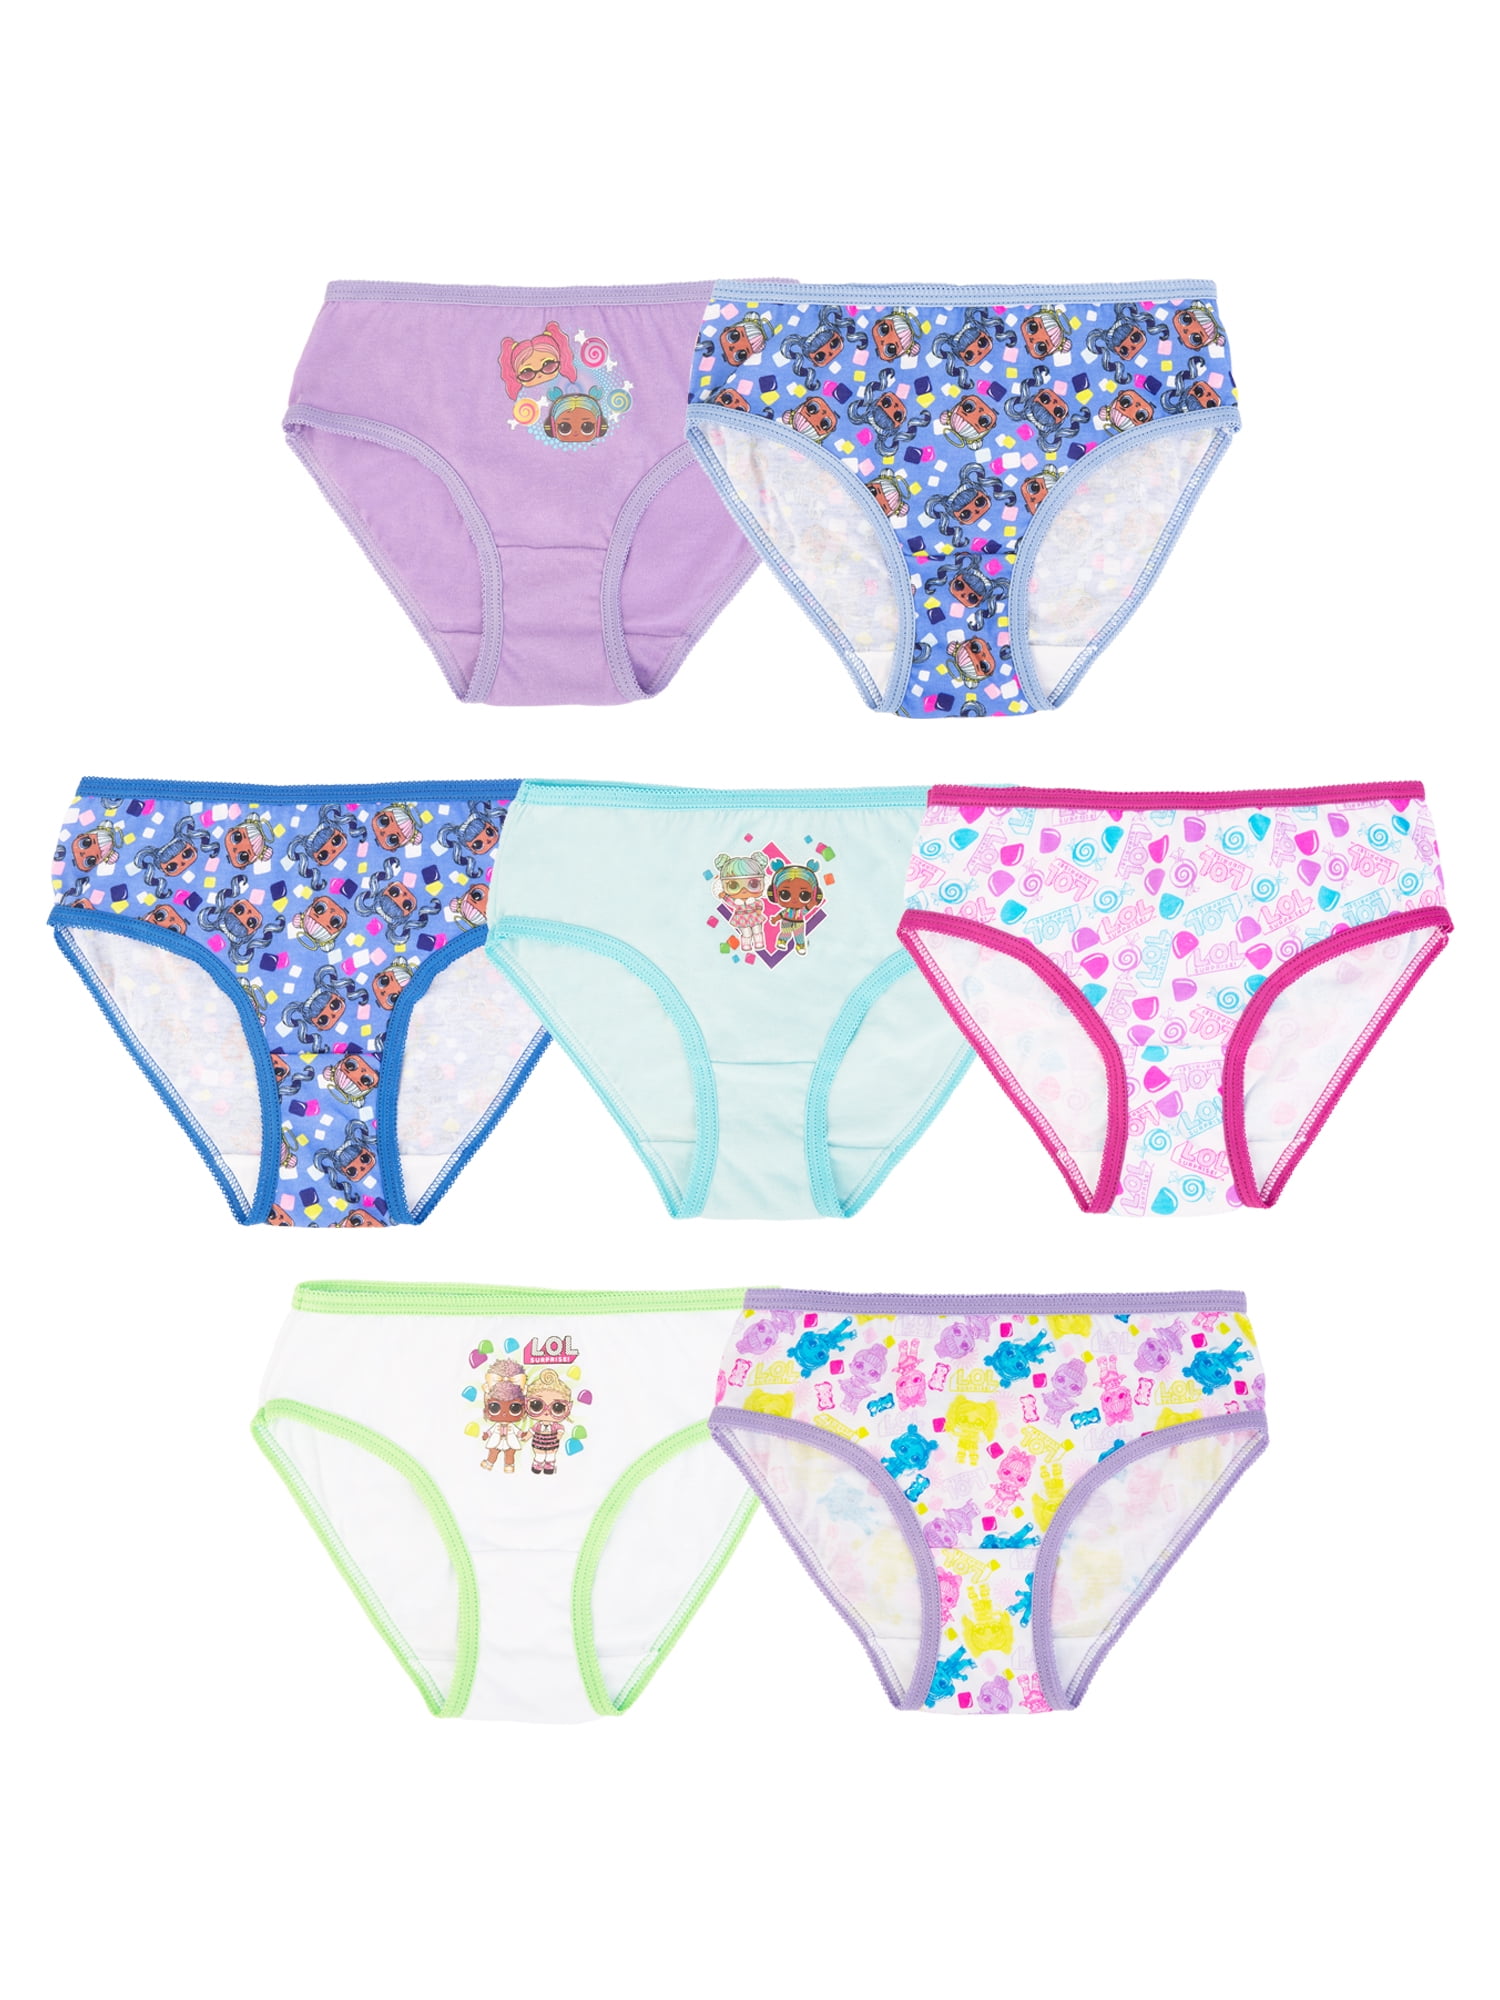 LOL Surprise Girls Panties Underwear 8-Pack Sizes 2T/3T, 4T, 4, 6